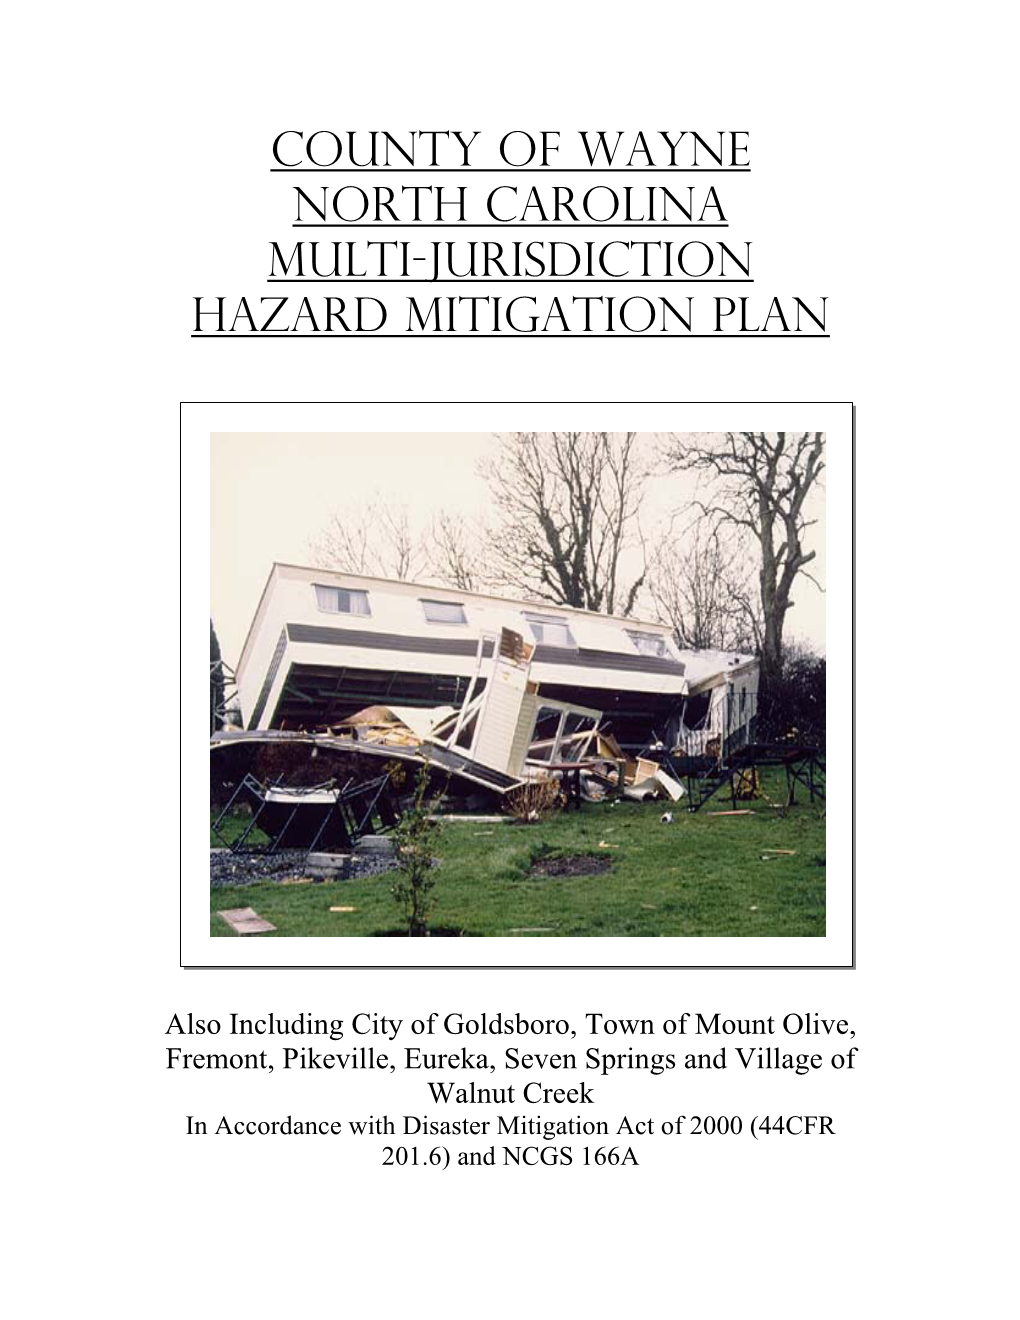 County of Wayne, North Carolina Multi-Jurisdiction Hazard Mitigation Plan